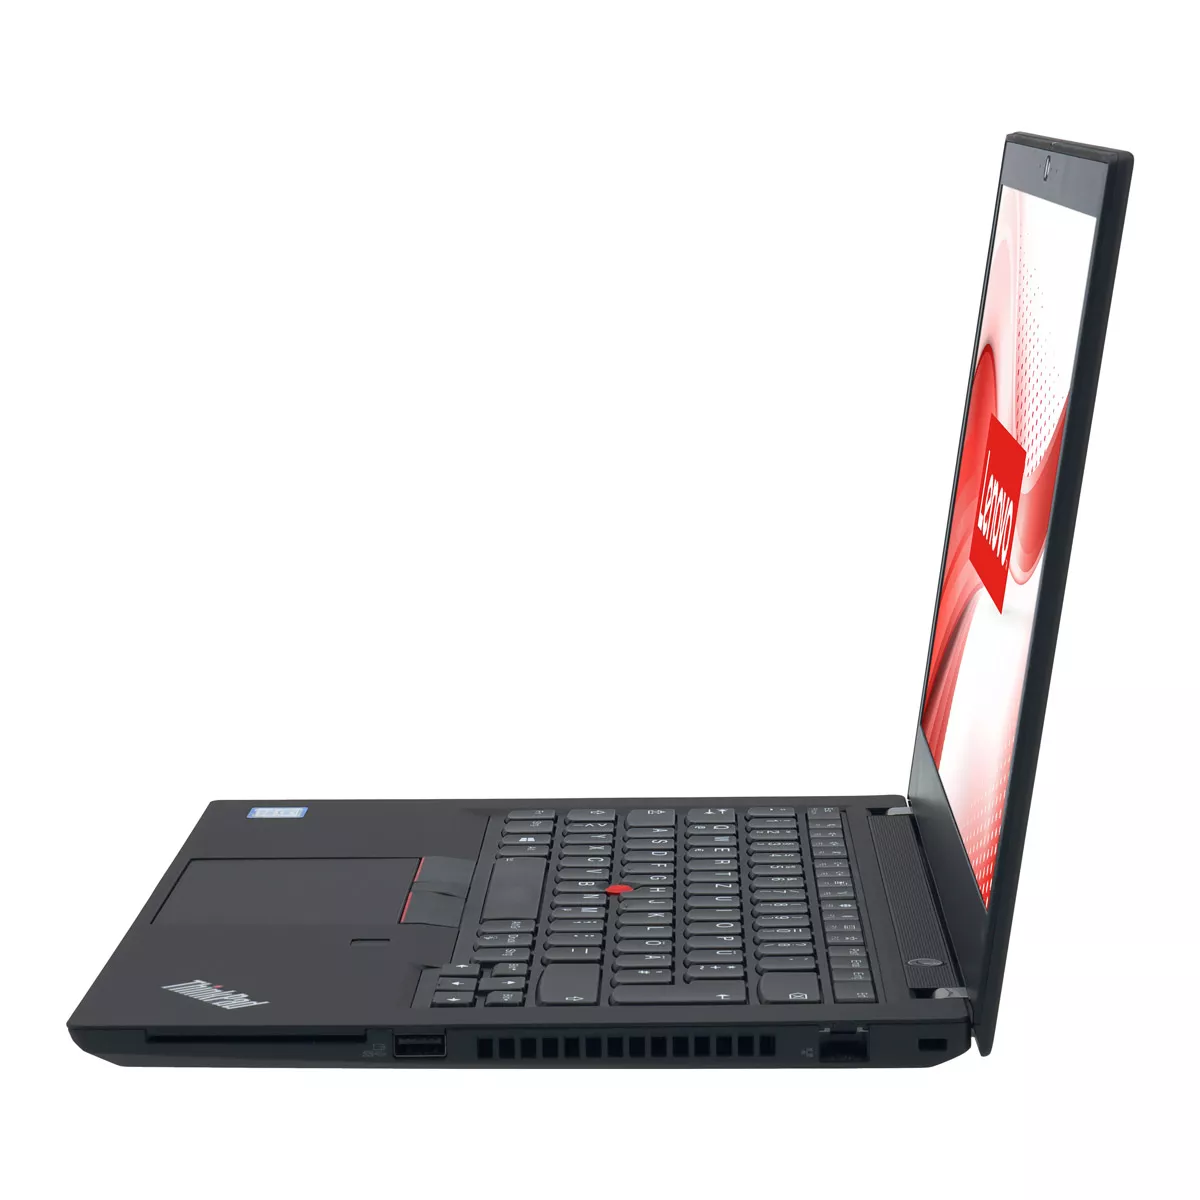 Lenovo ThinkPad T490 Core i5 8265U Full-HD 8 GB 240 GB M.2 nVME SSD Webcam A+